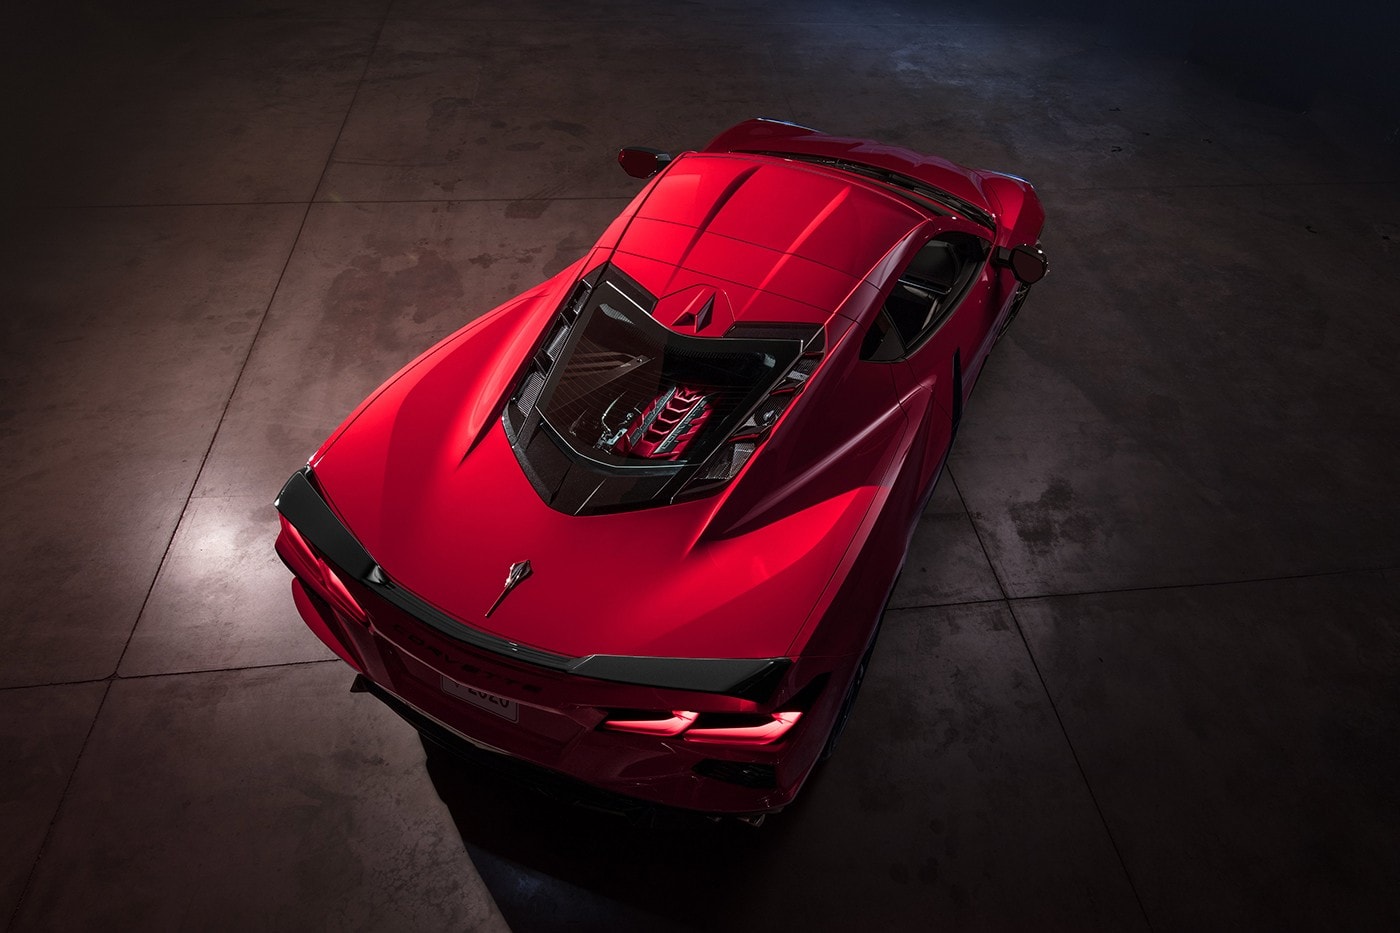 Chevrolet 推出 2020 年樣式全新世代 Corvette 車型